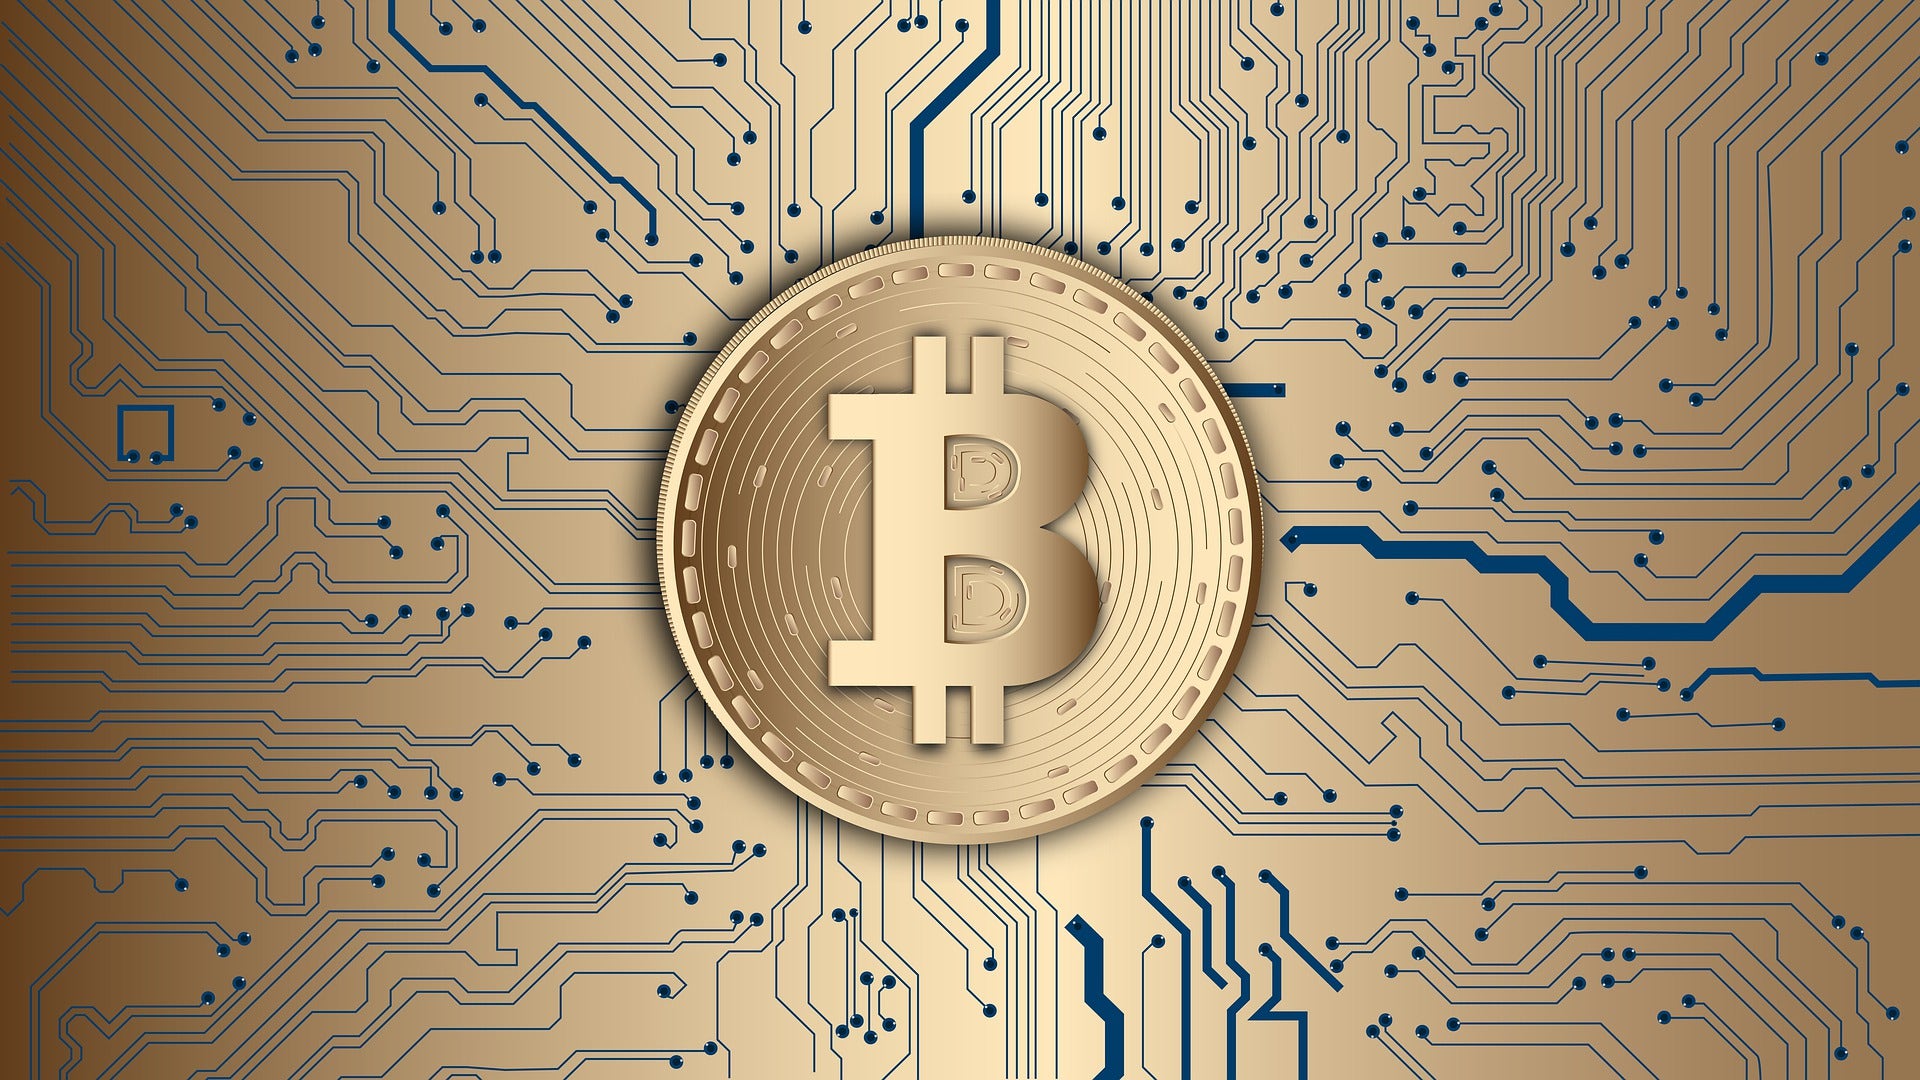 2 Reasons Bitcoin Could 'Crash To Ground Level' According To Morgan Creek's Yusko